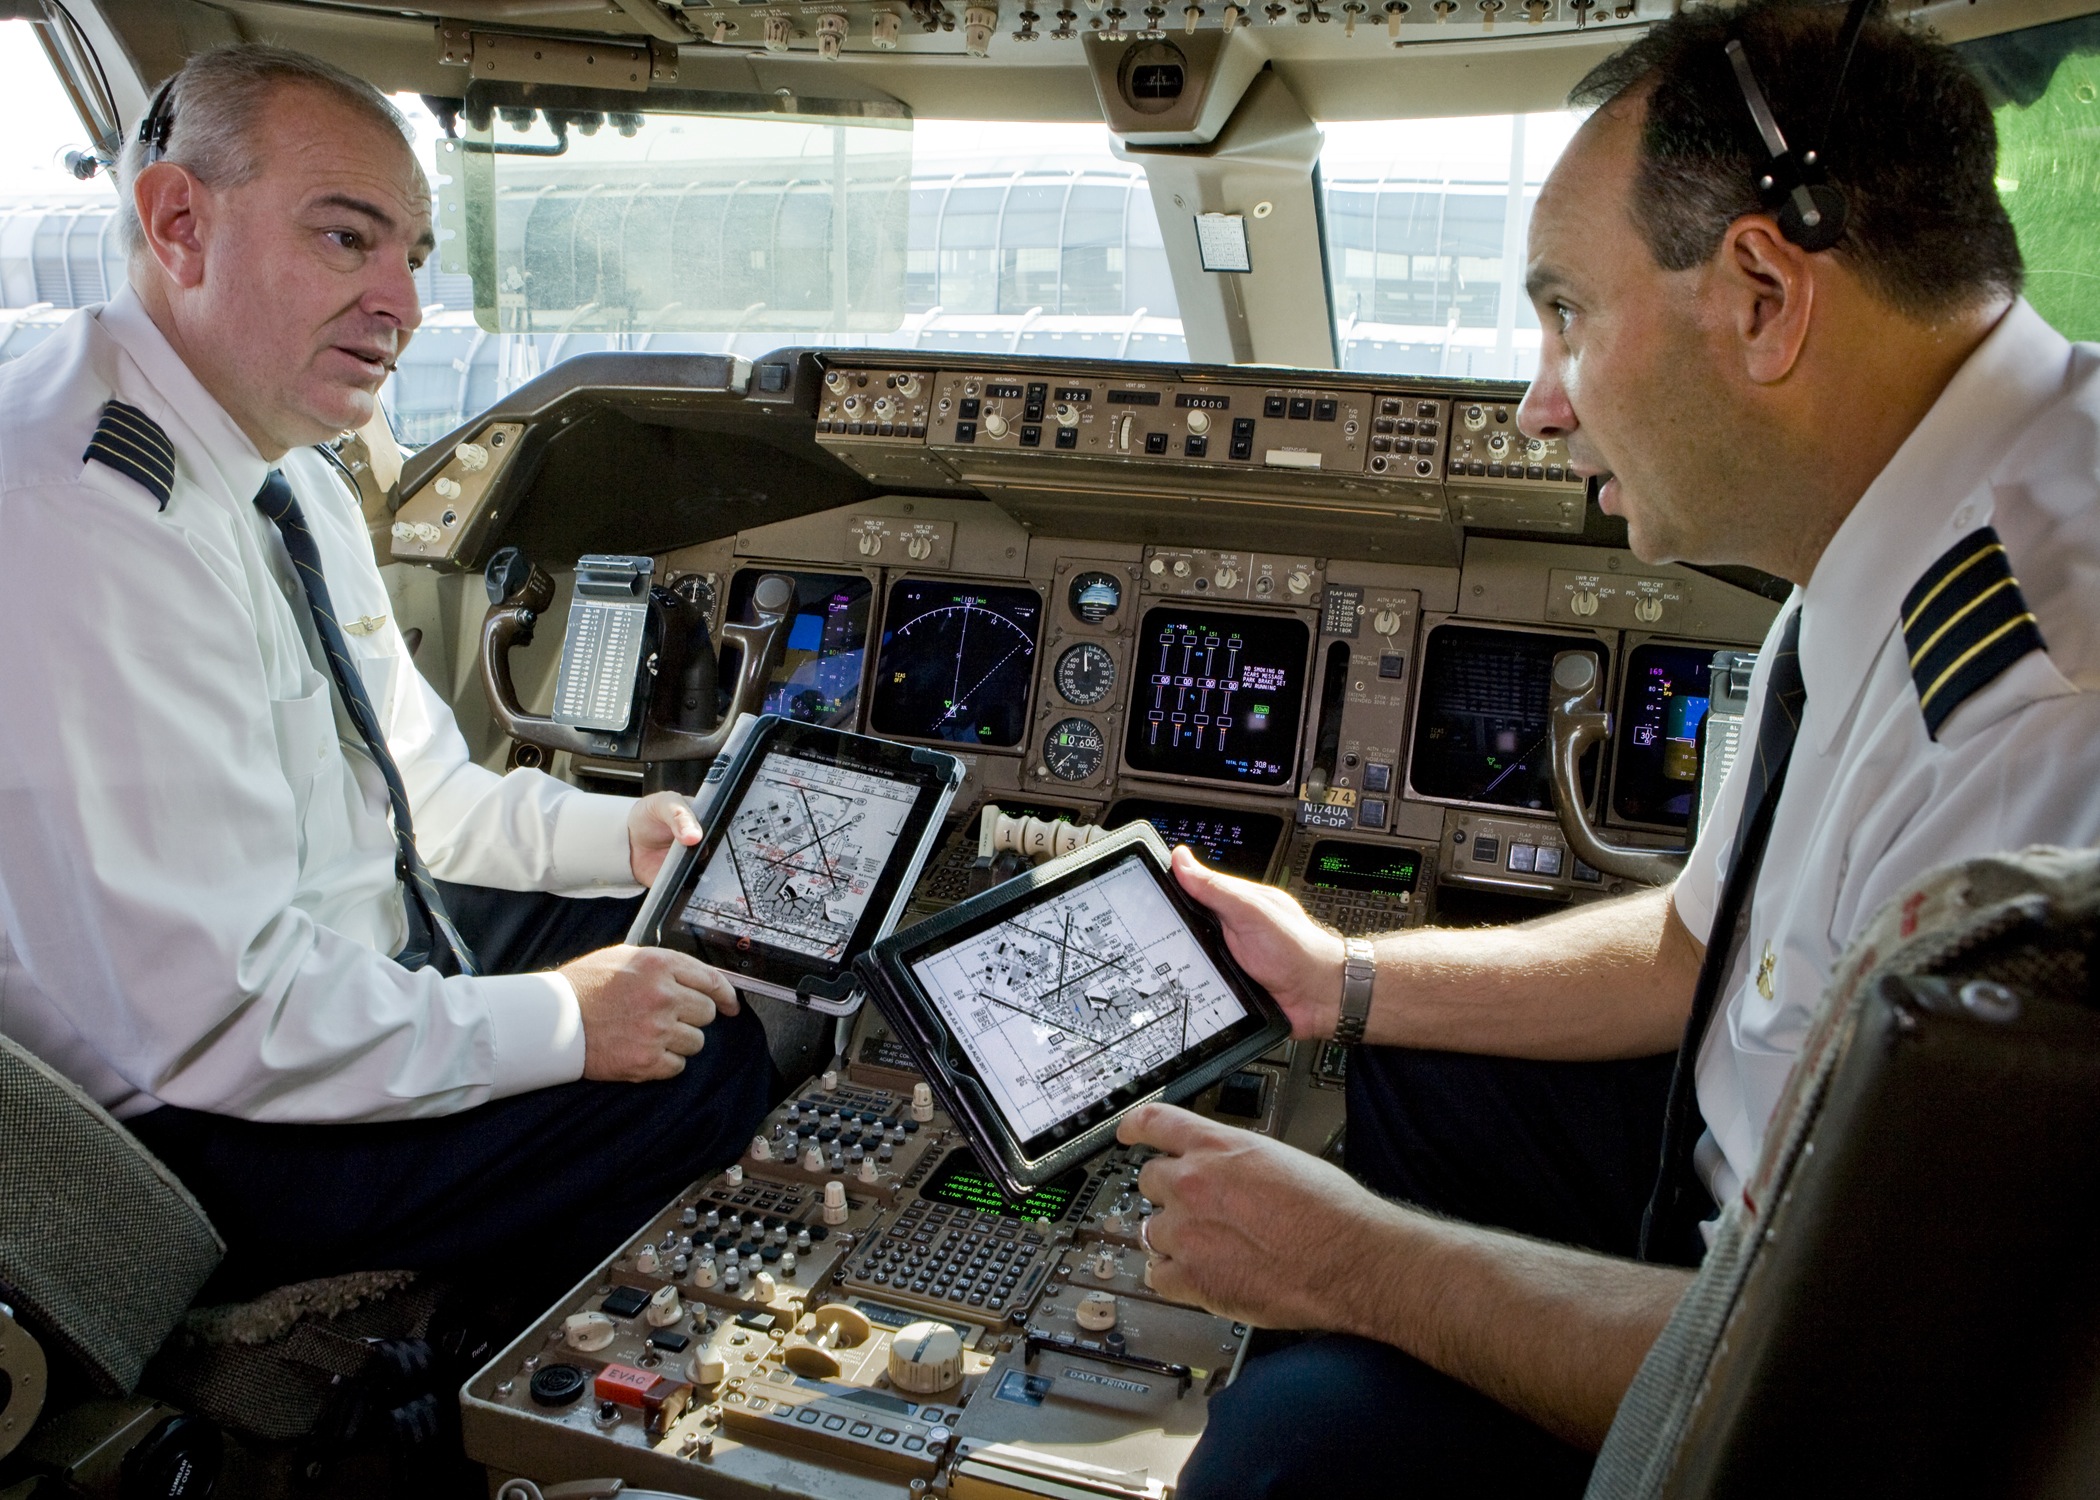 ua flightdeck4 1 | app | [ข่าว] ปัญหาเกิดเมื่อแอพใน iPad นักบินขัดข้องส่งผล American Airline ดีเลย์หลายเที่ยวบิน